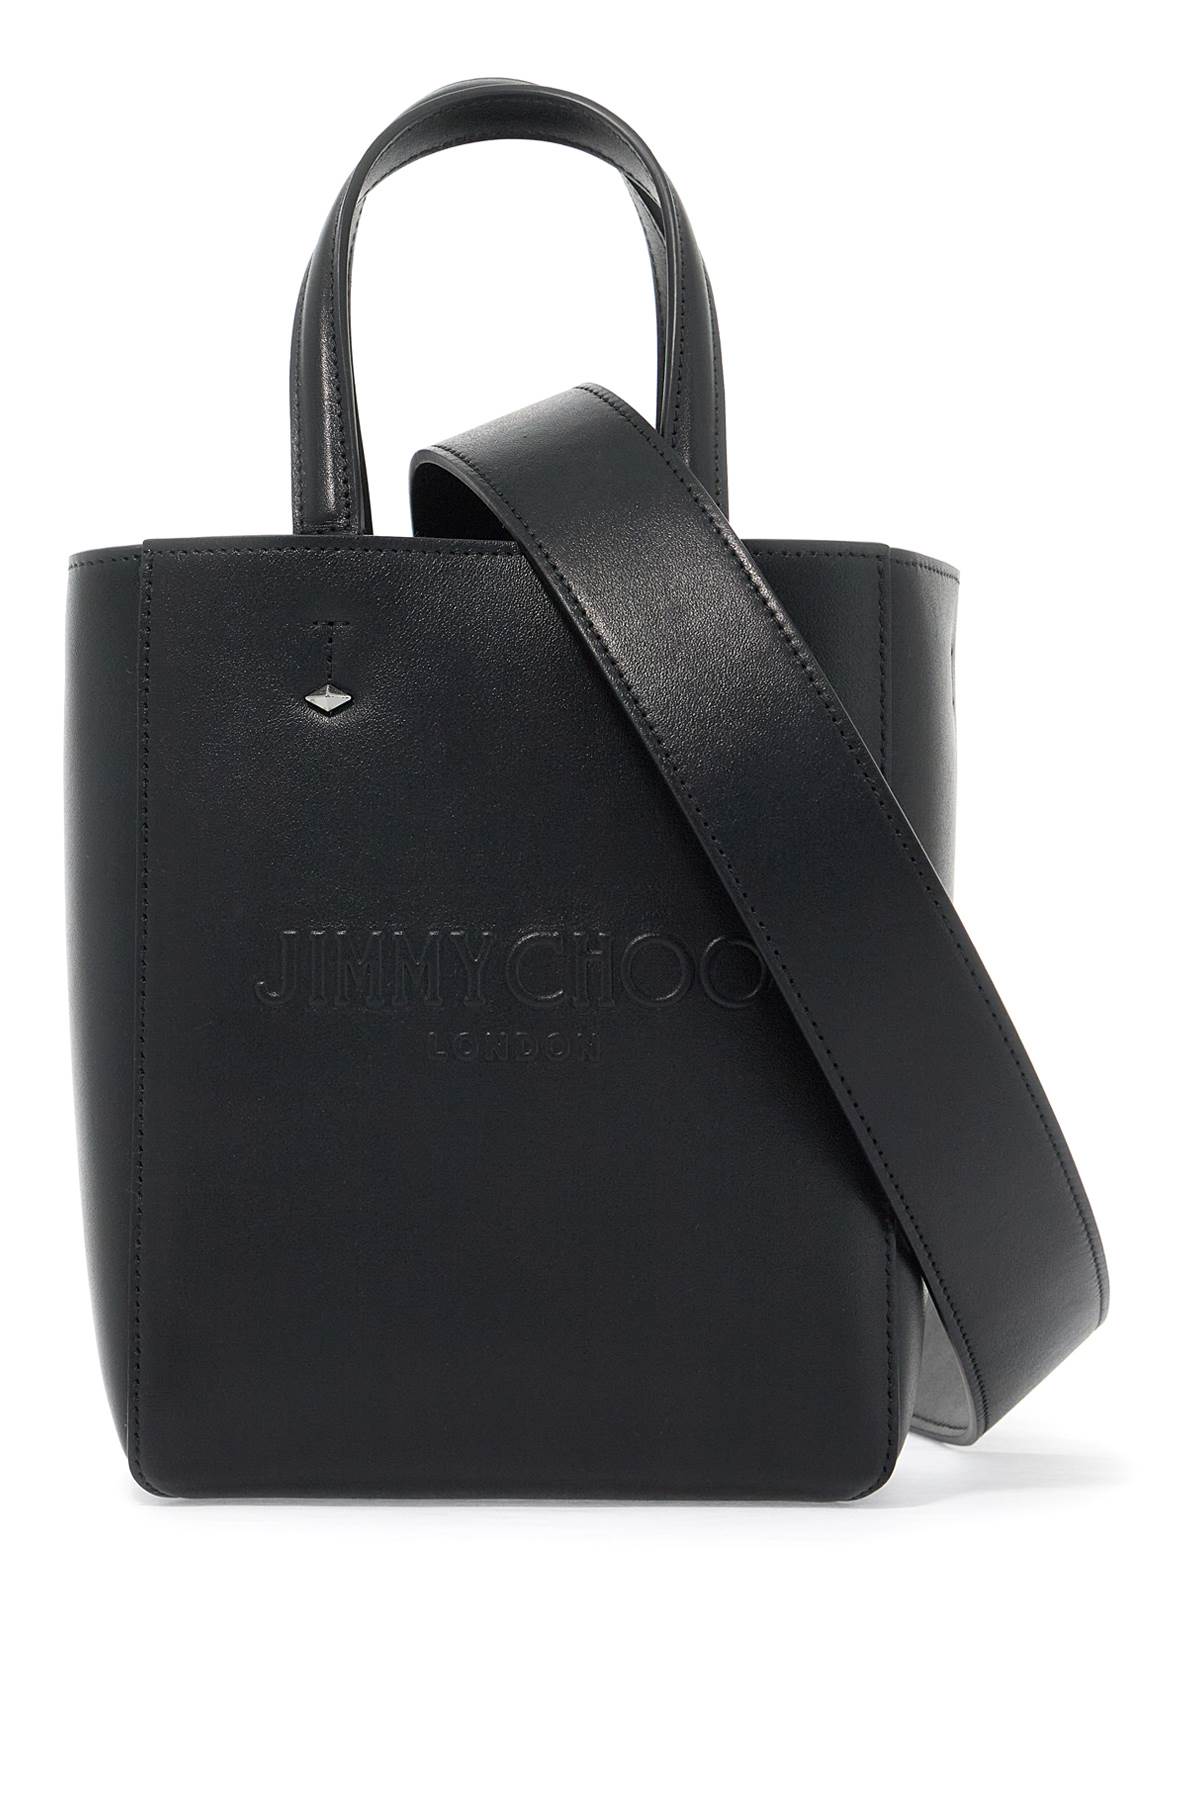 JIMMY CHOO SMOOTH LEATHER LENNY N/S Tote Handbag Handbag.